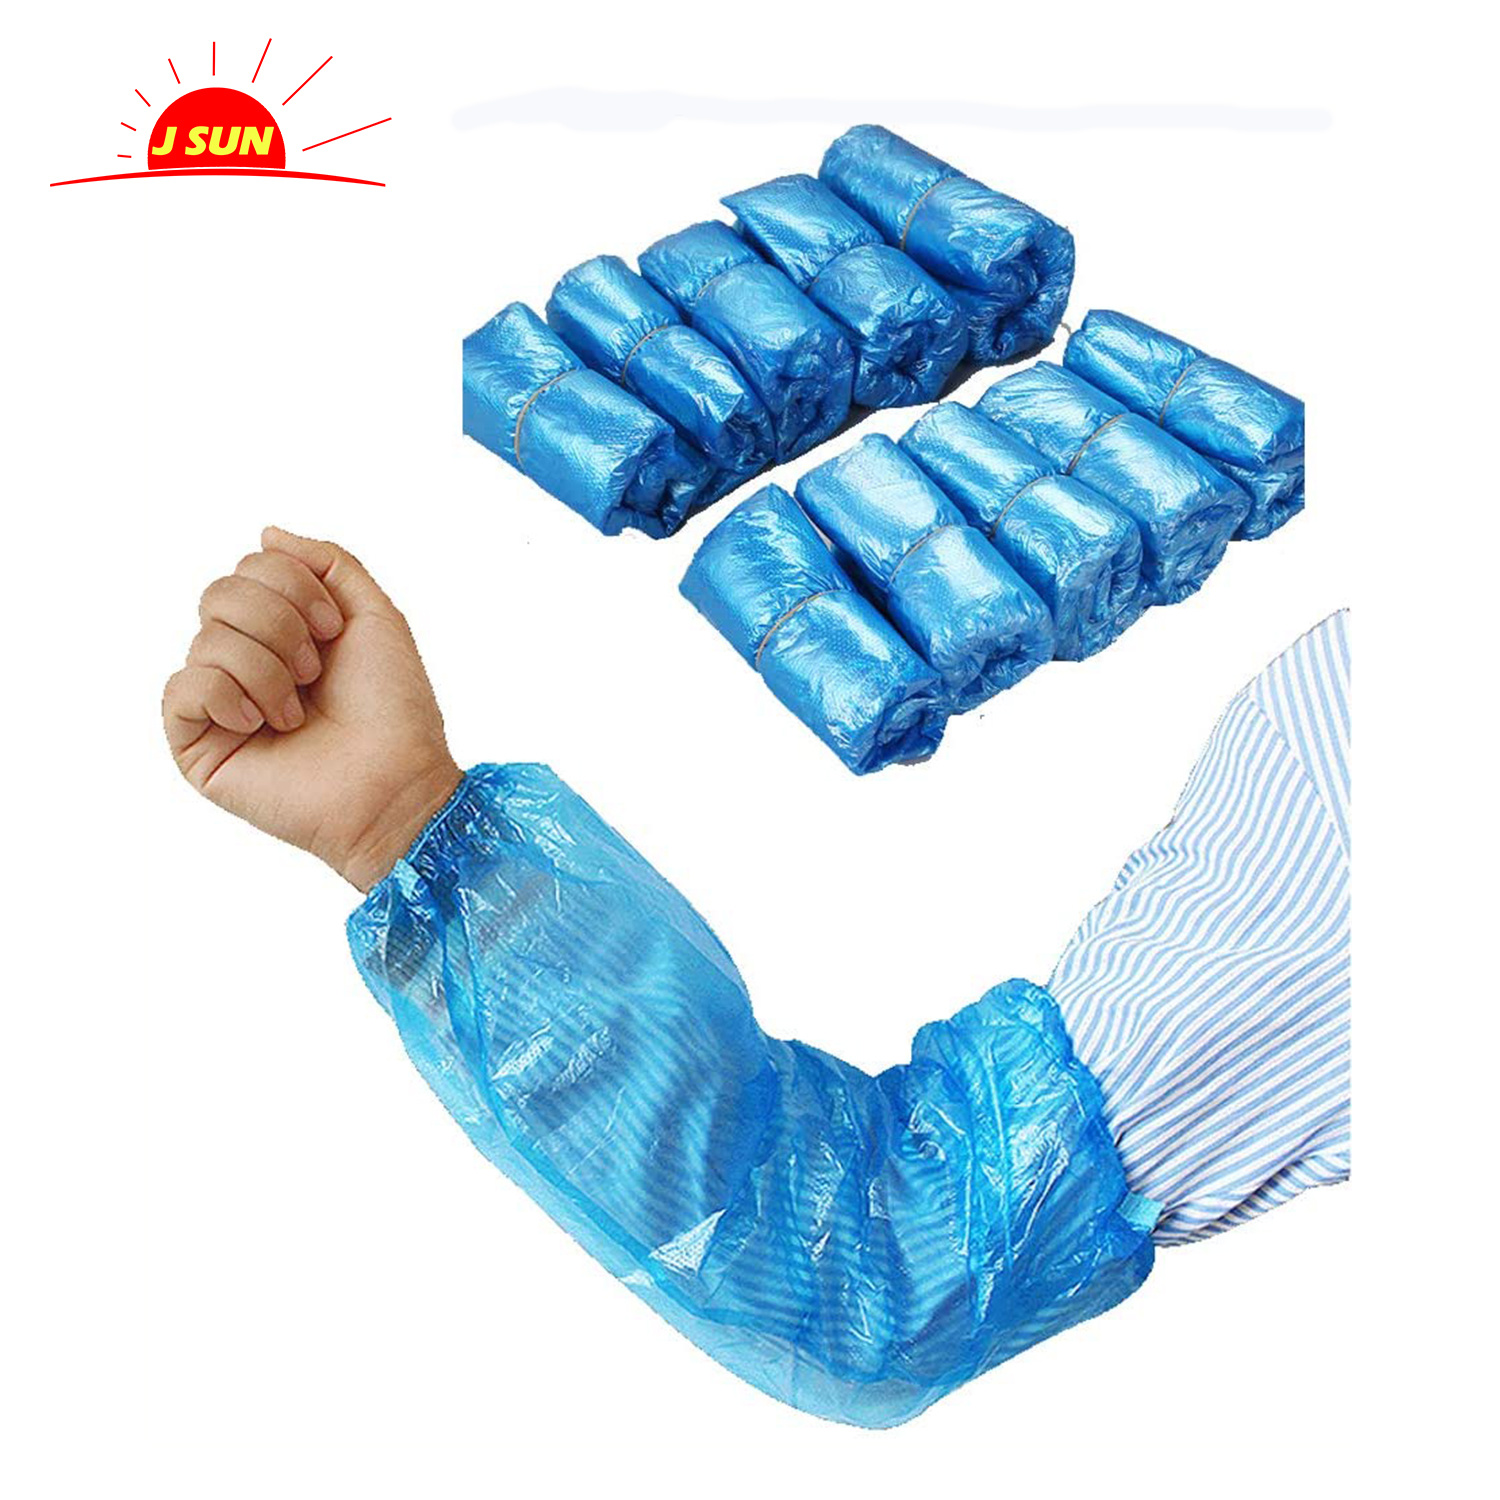 Disposable Arm Sleeves Waterproof Durable PE Sleeve Covers with Elastic